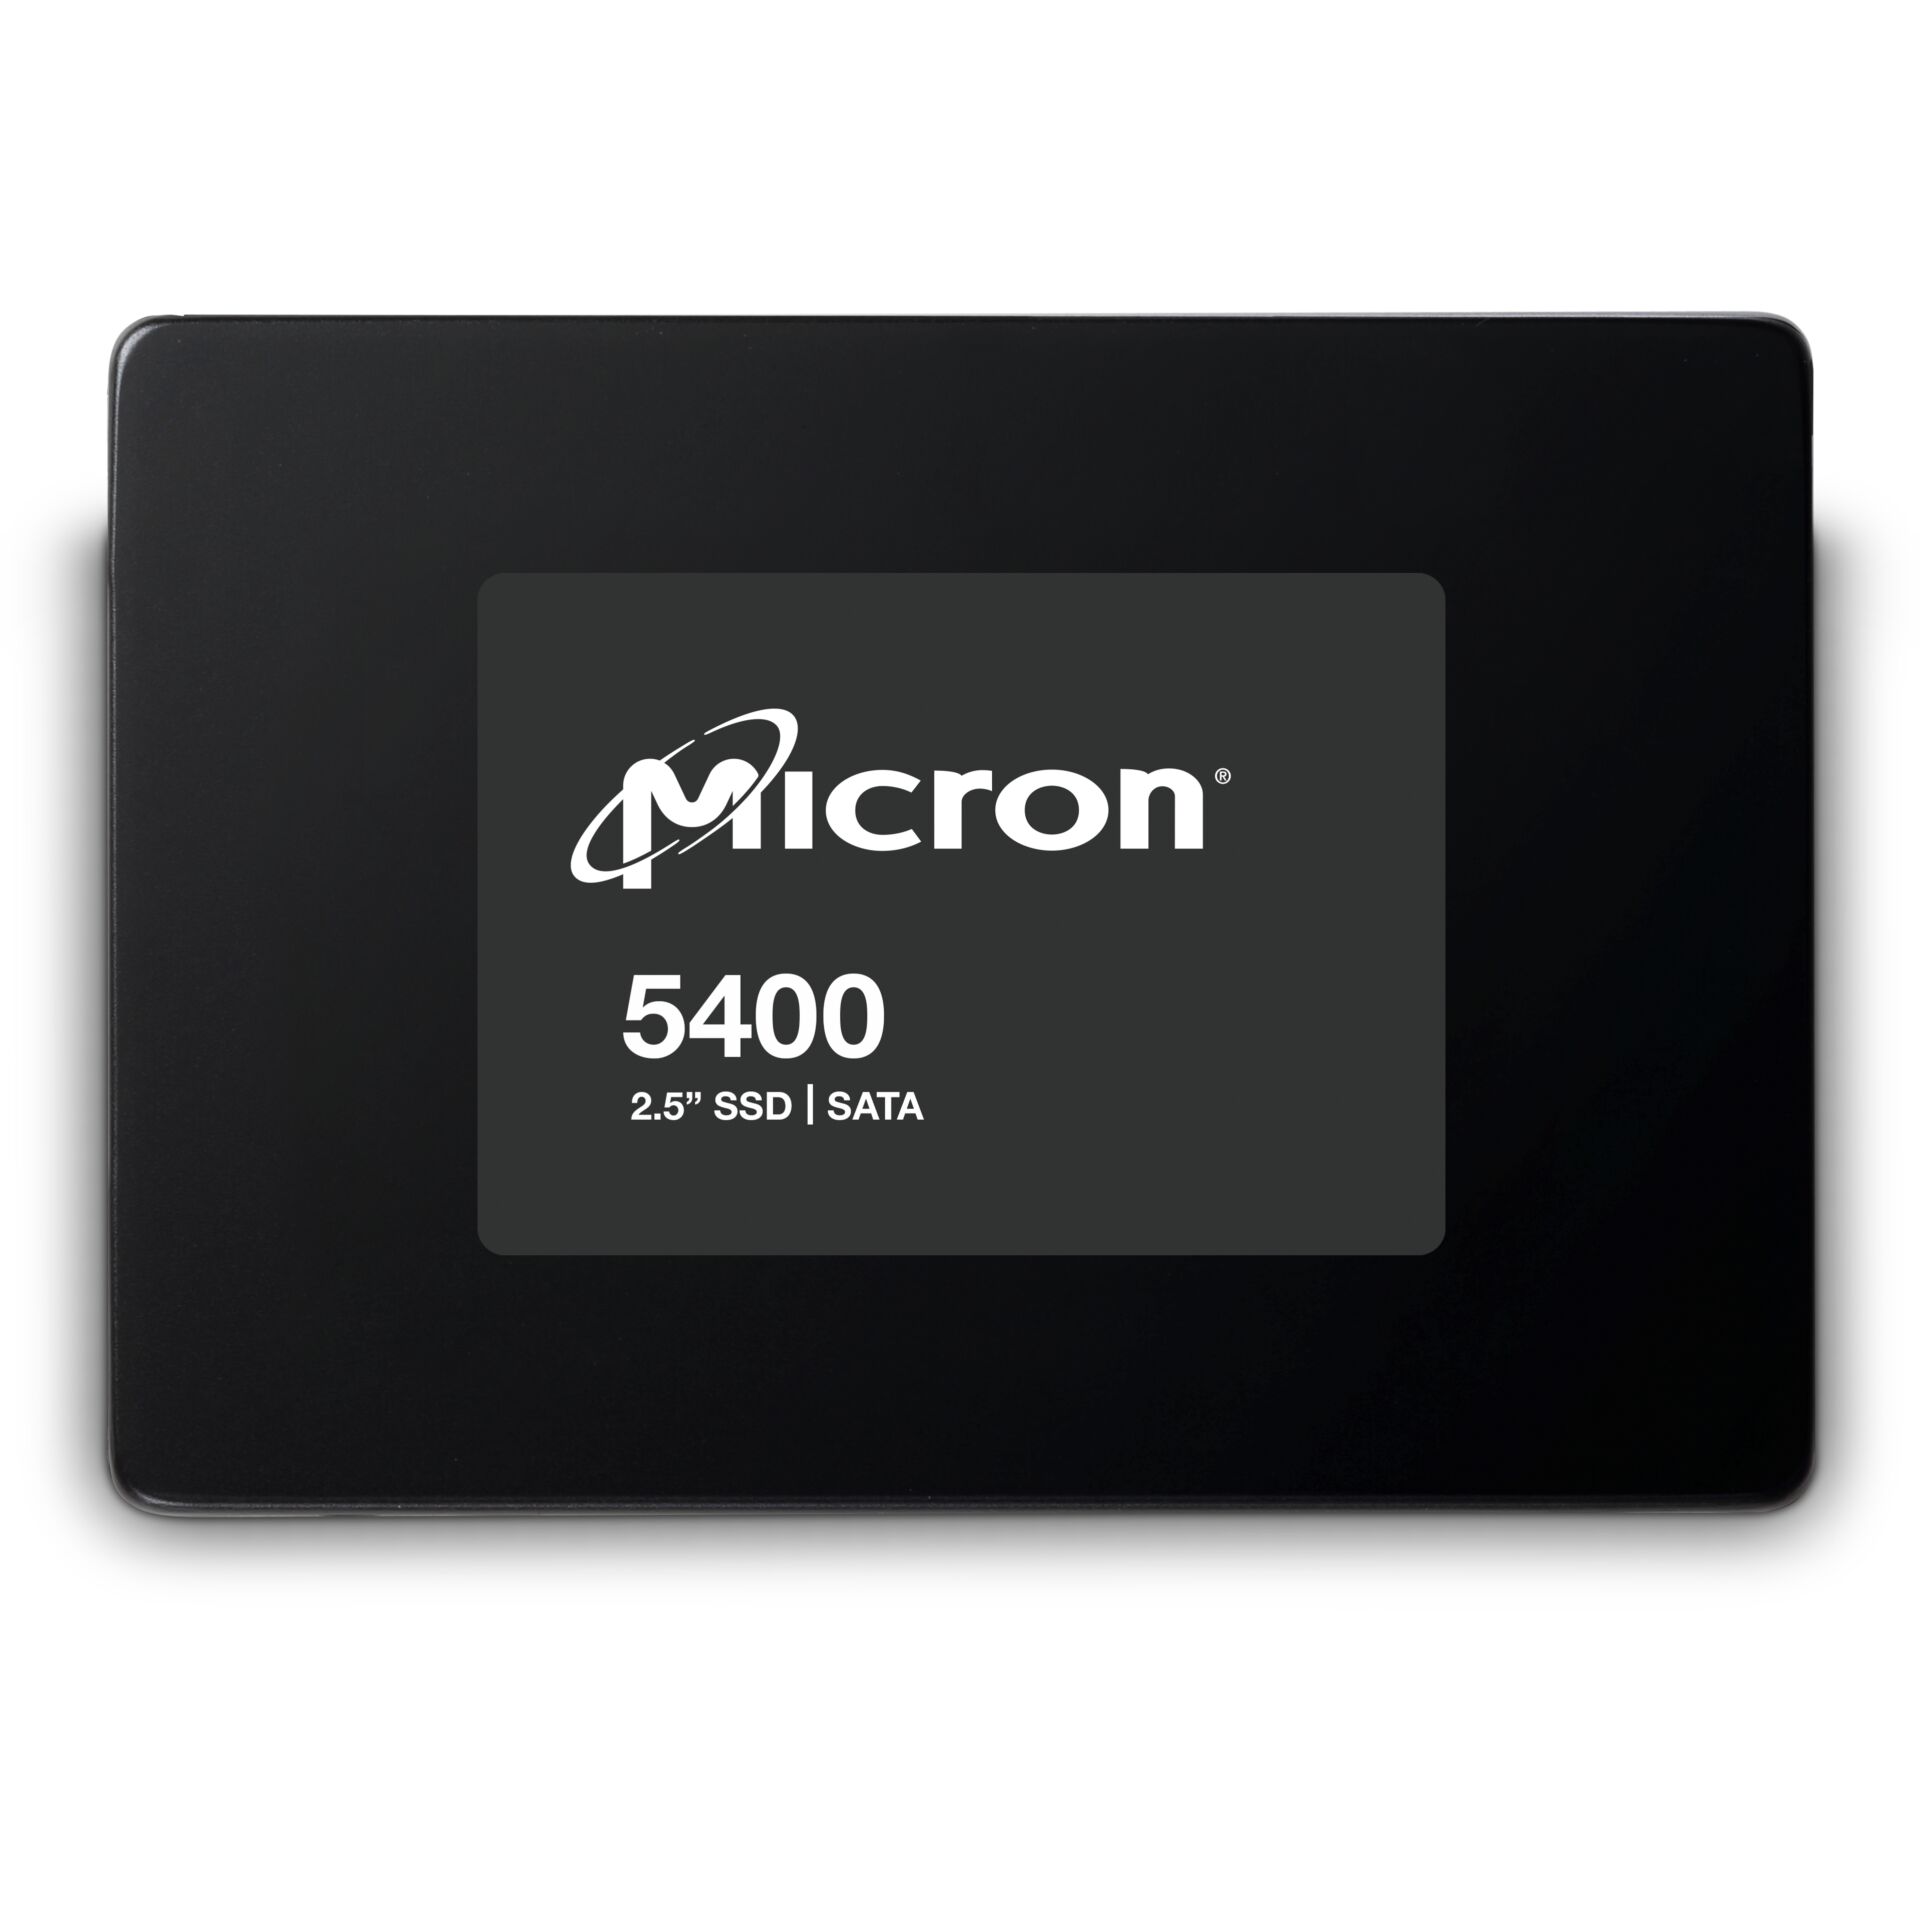 960 GB SSD Micron 5400 MAX - Mixed Use, SATA 6Gb/s, lesen: 540MB/s, schreiben: 520MB/s, TBW: 8.76PB